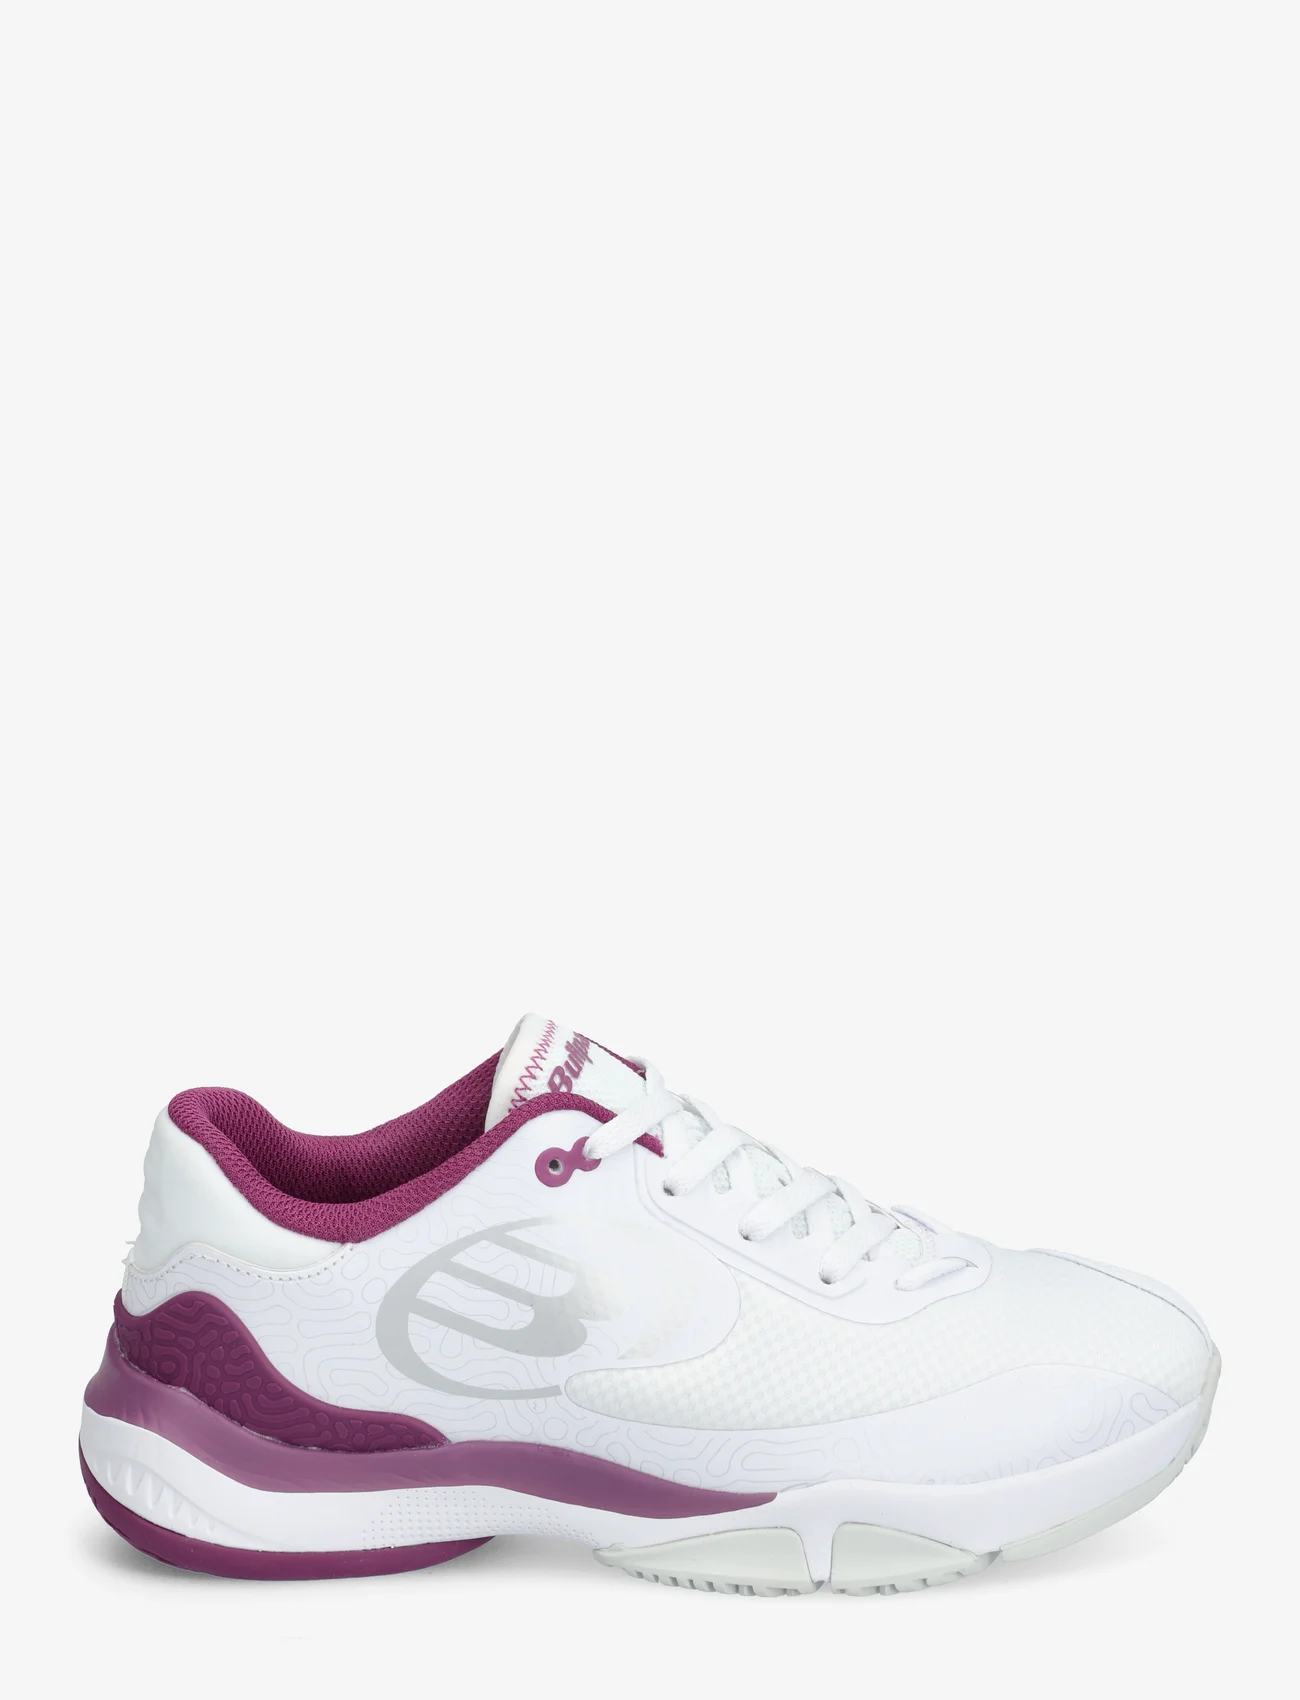 Bullpadel - FLOW HYBRID FLY - racketsports shoes - white/violet - 1